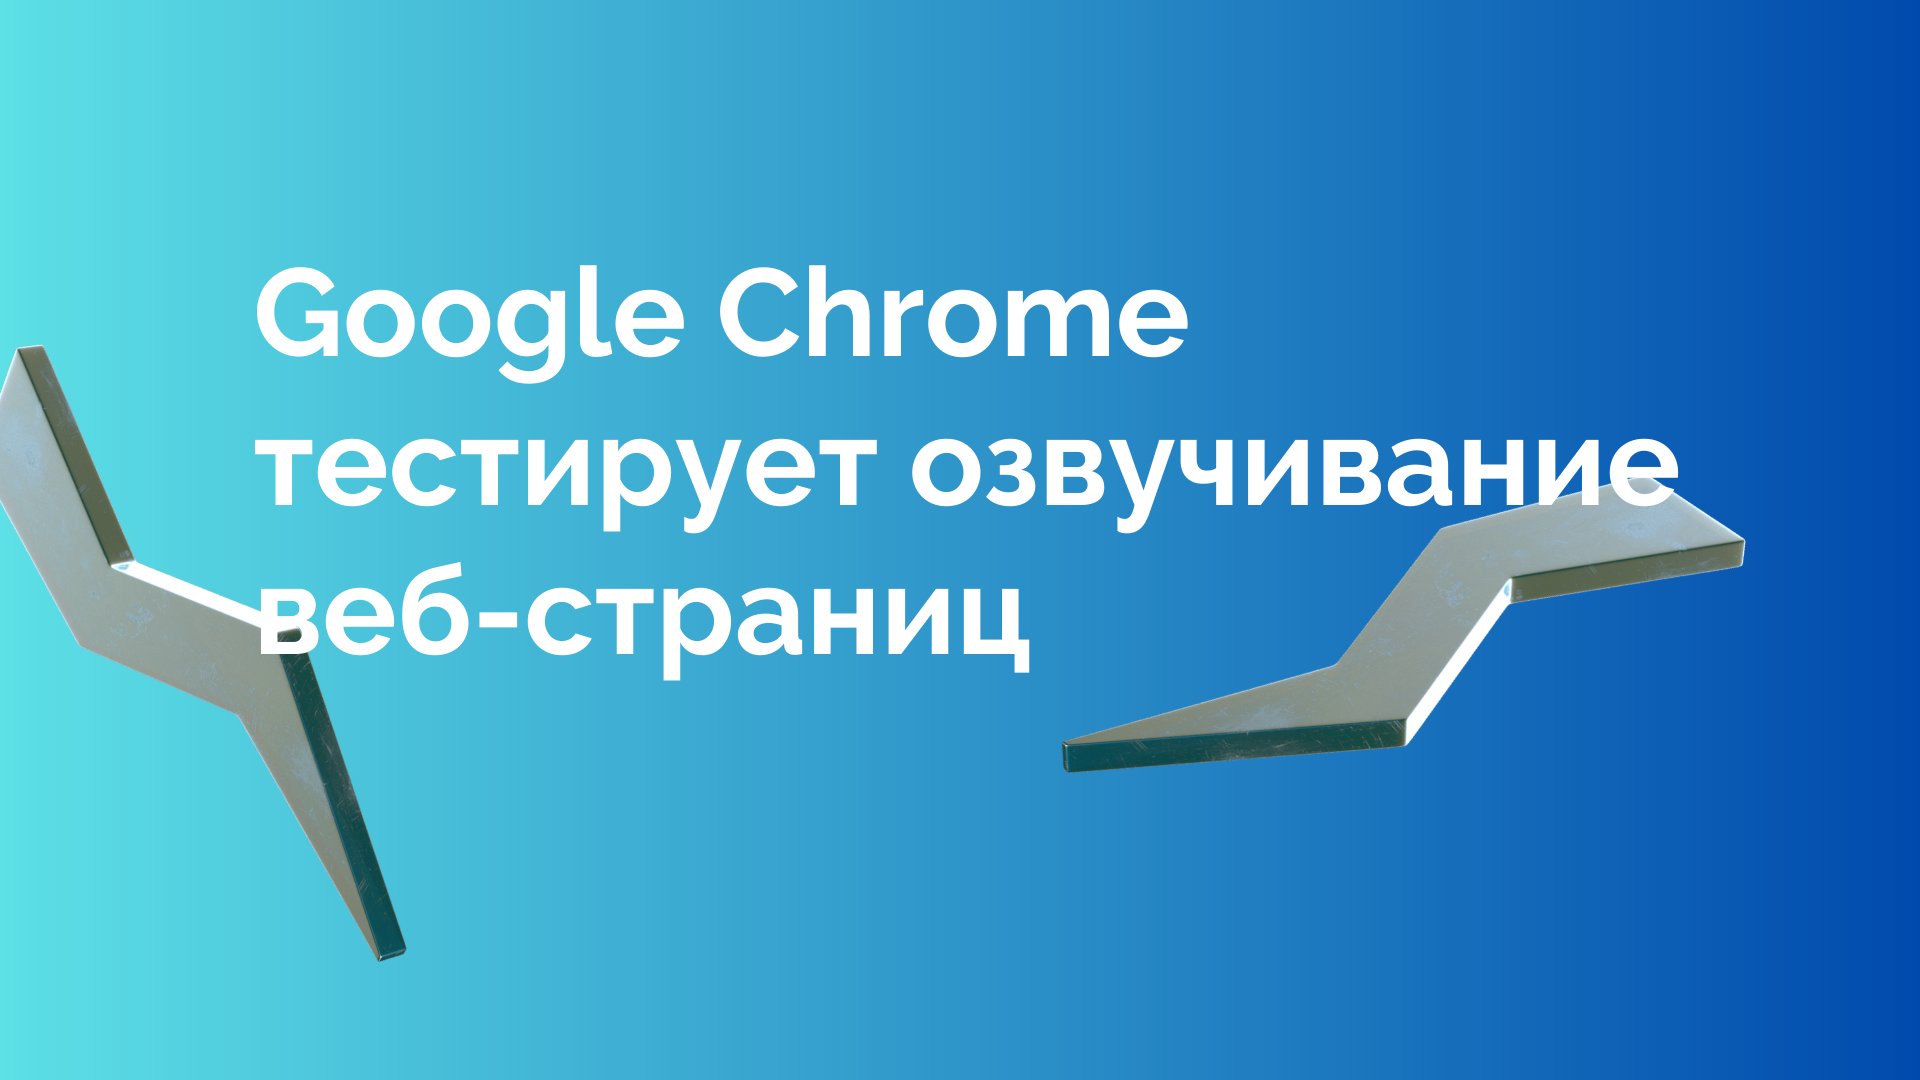 Google Chrome тестирует озвучивание веб-страниц